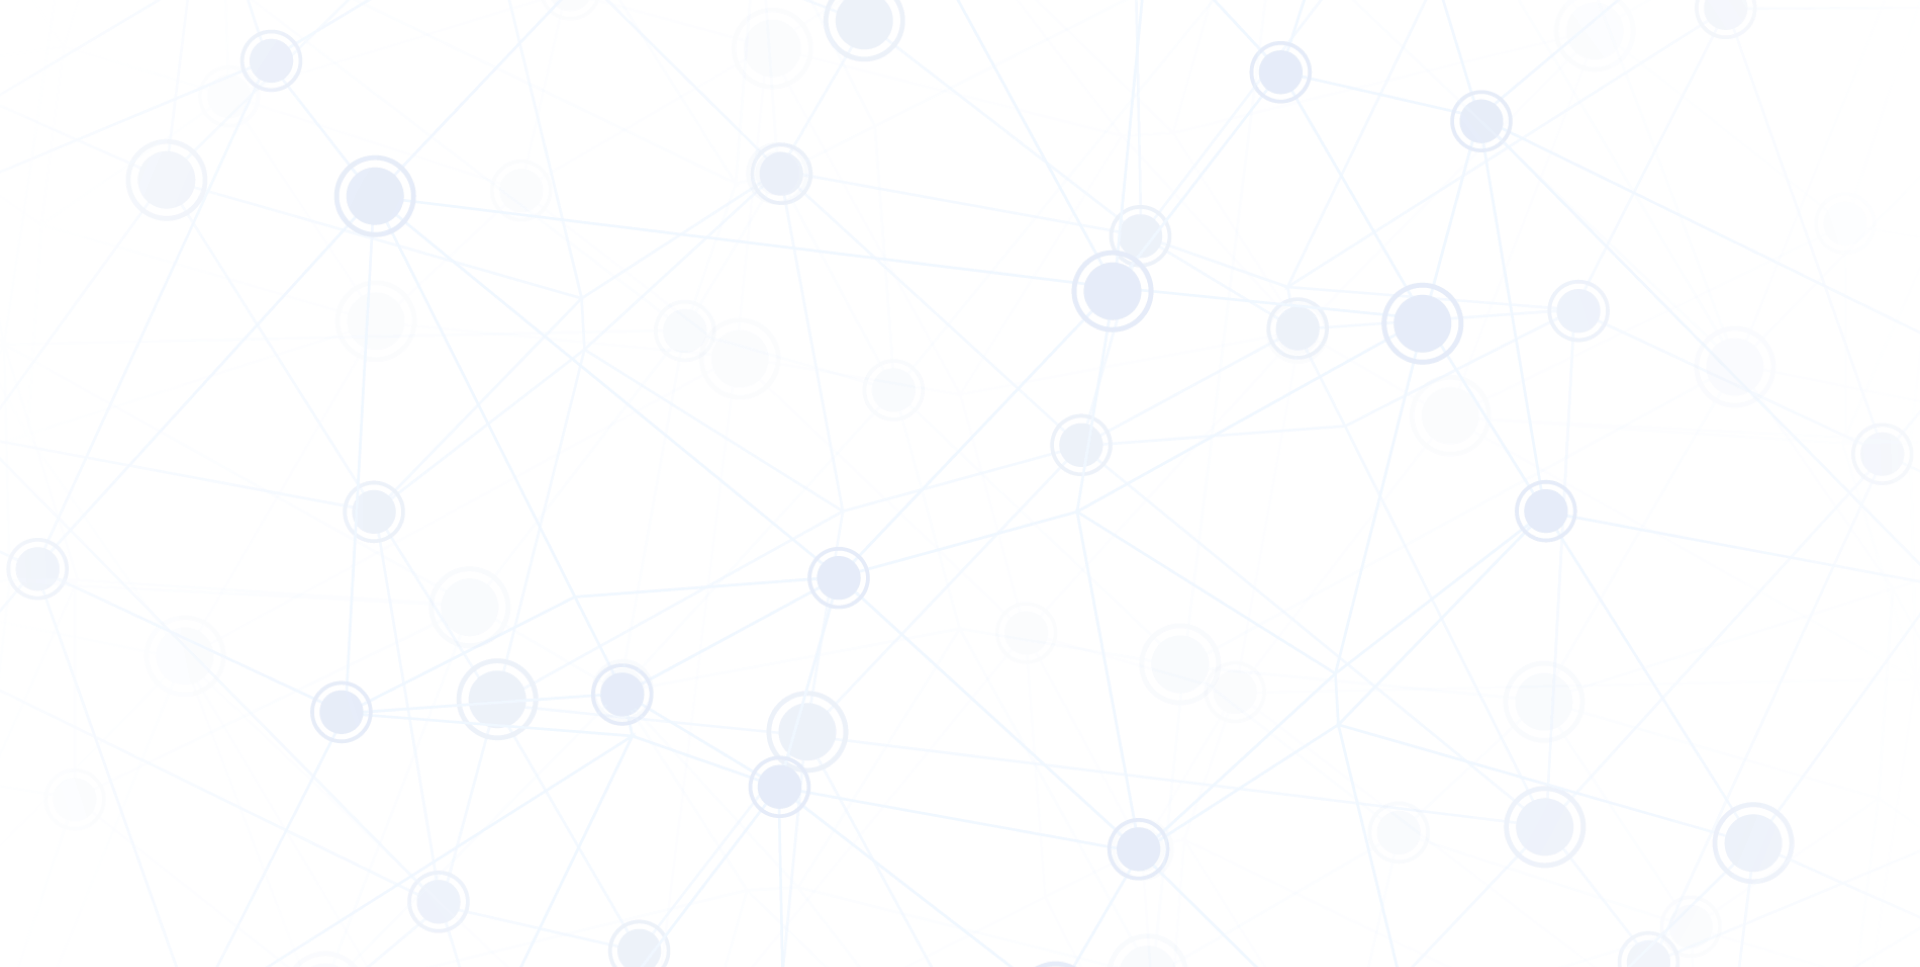 Network Image